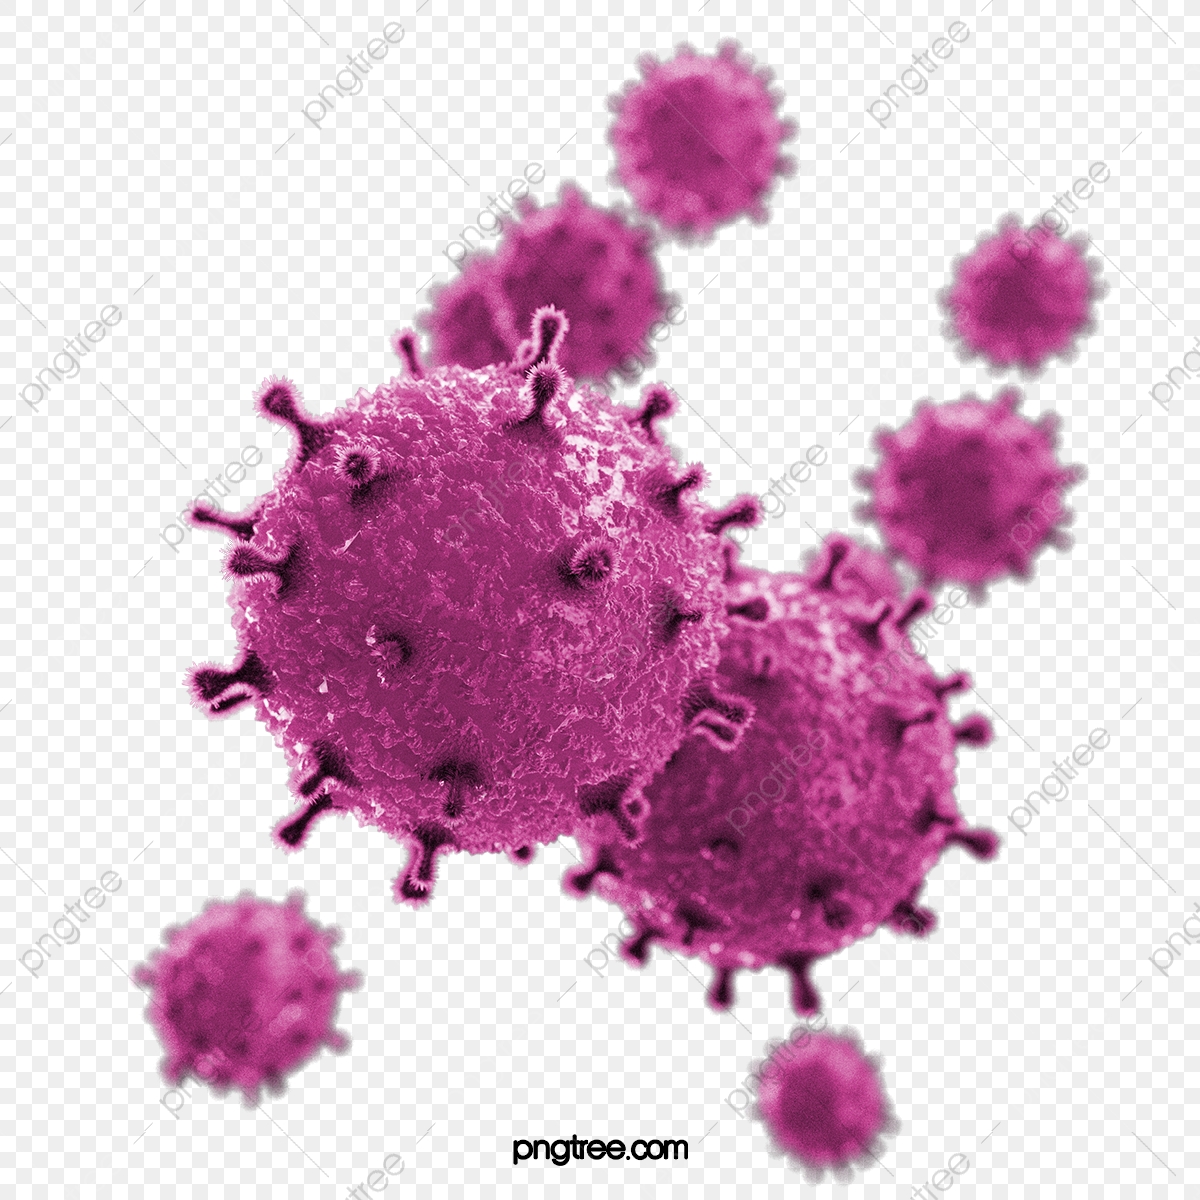 Pink 3d Corona Virus Element